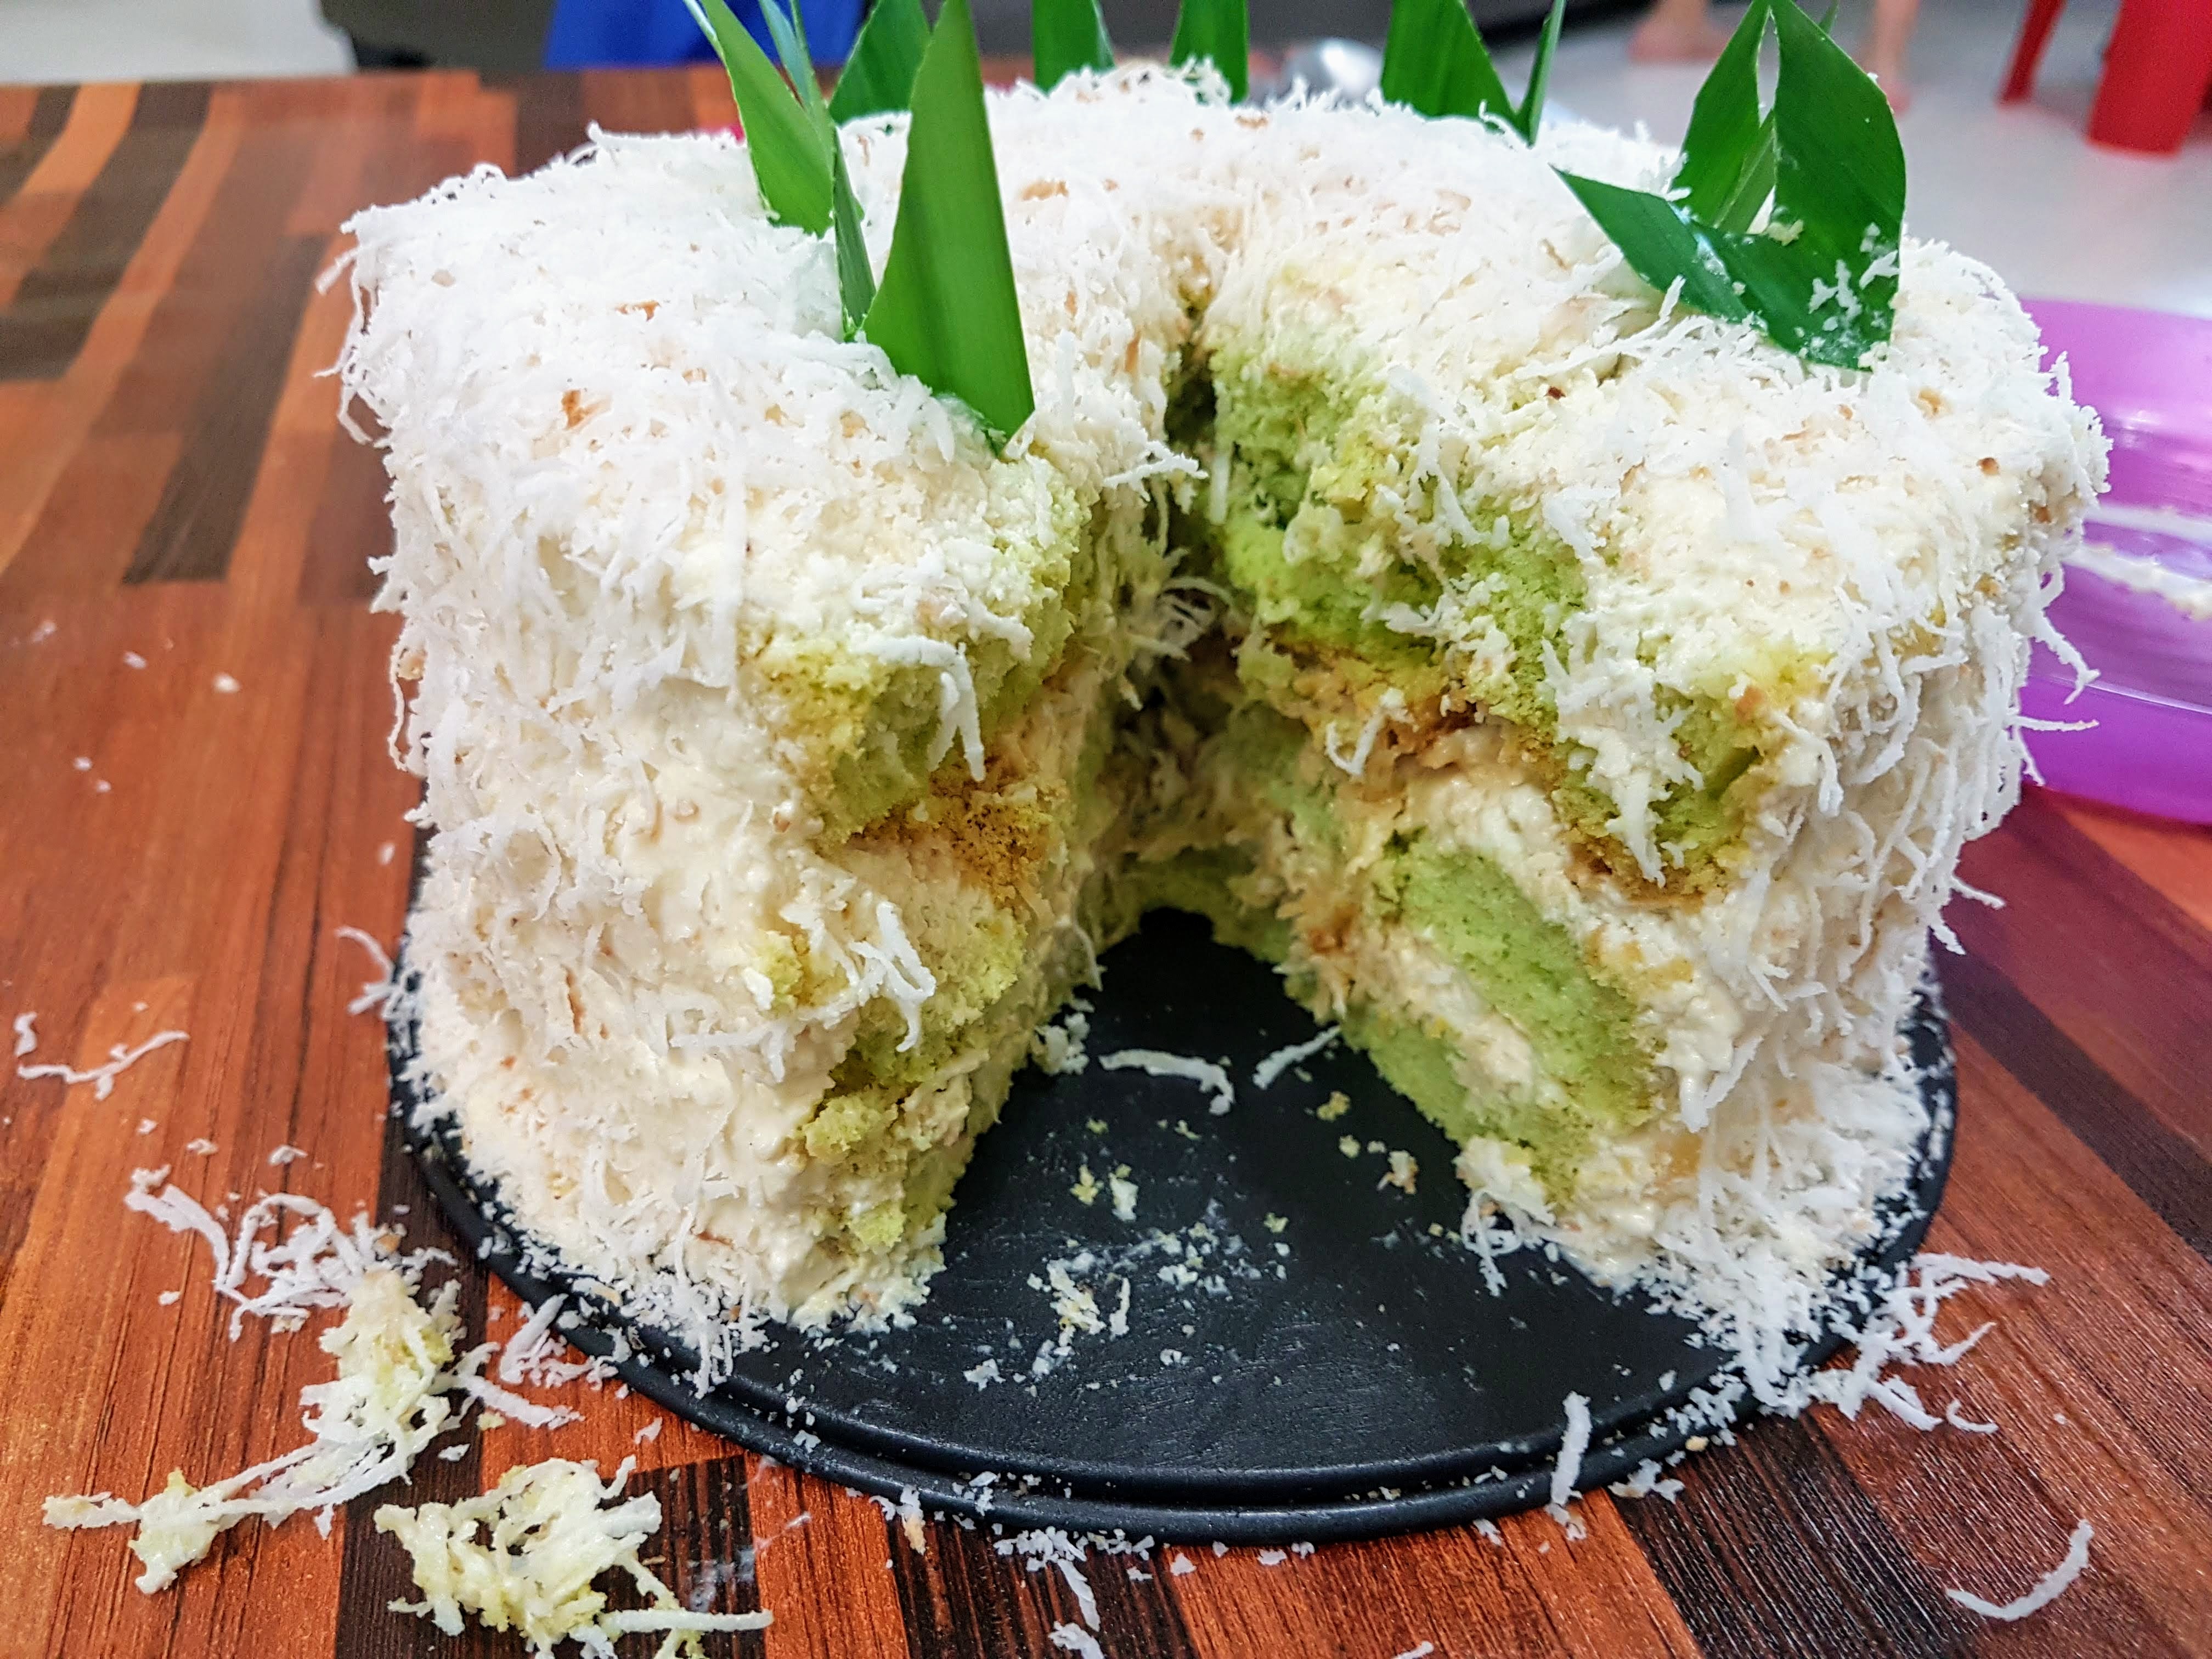 【食谱分享】斑斓椰糖椰丝蛋糕 Coconut Pandan Cake With Gula Melaka/ Ondeh Ondeh Cake - 吃喝玩乐旅宝妈 LOVELYBAO123 ...